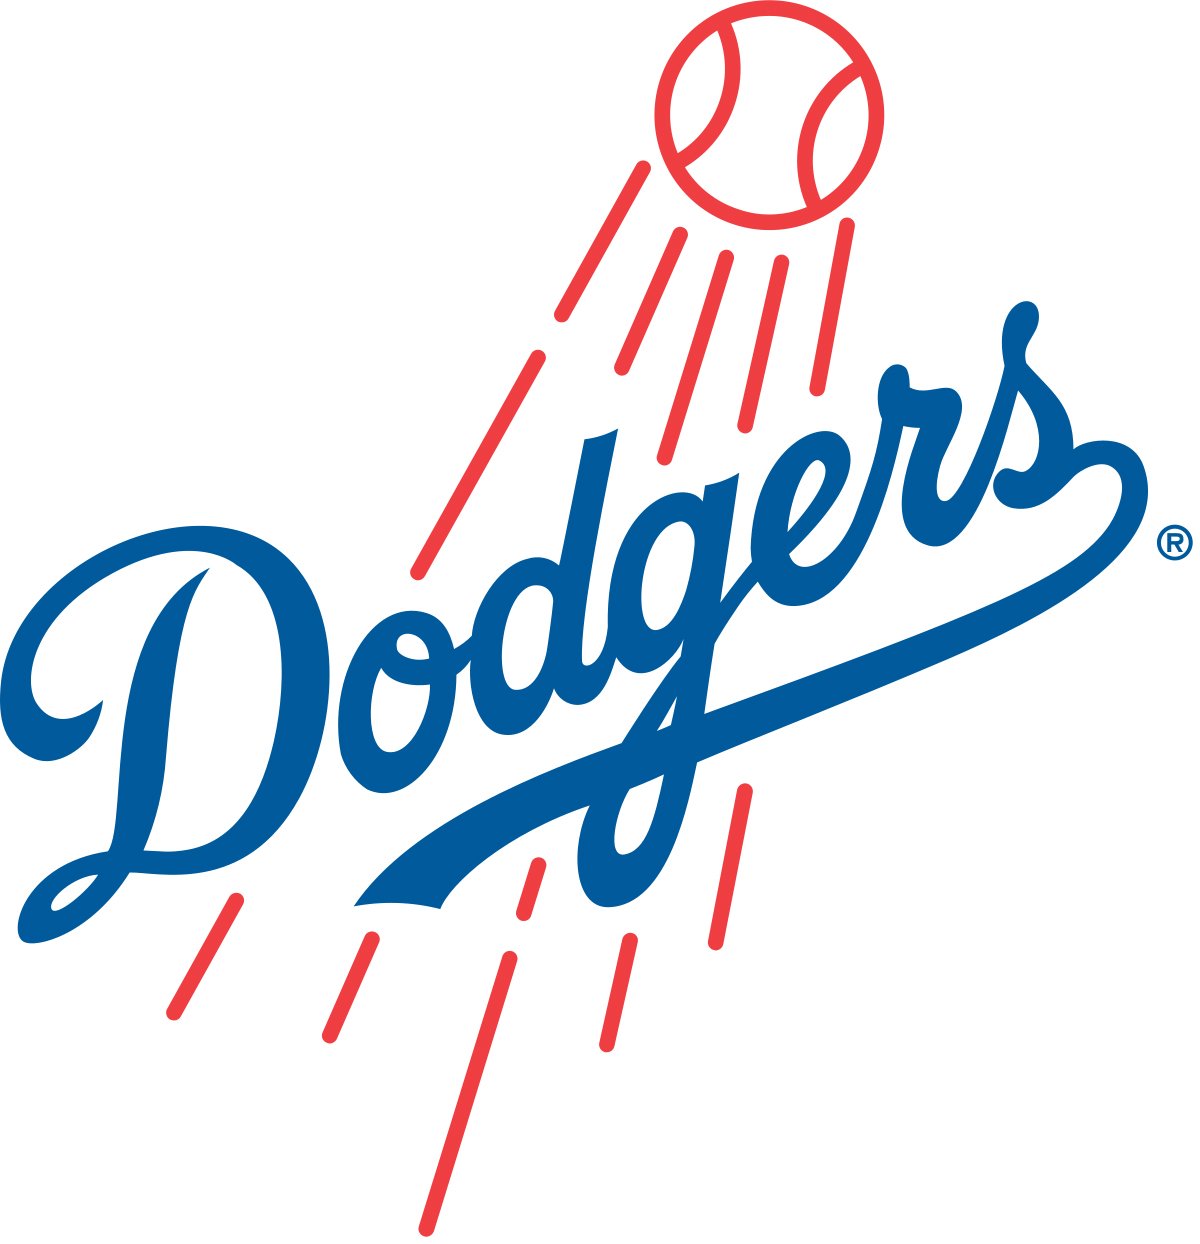 Los Angeles Dodgers Team Colors  HEX, RGB, CMYK, PANTONE COLOR CODES OF  SPORTS TEAMS